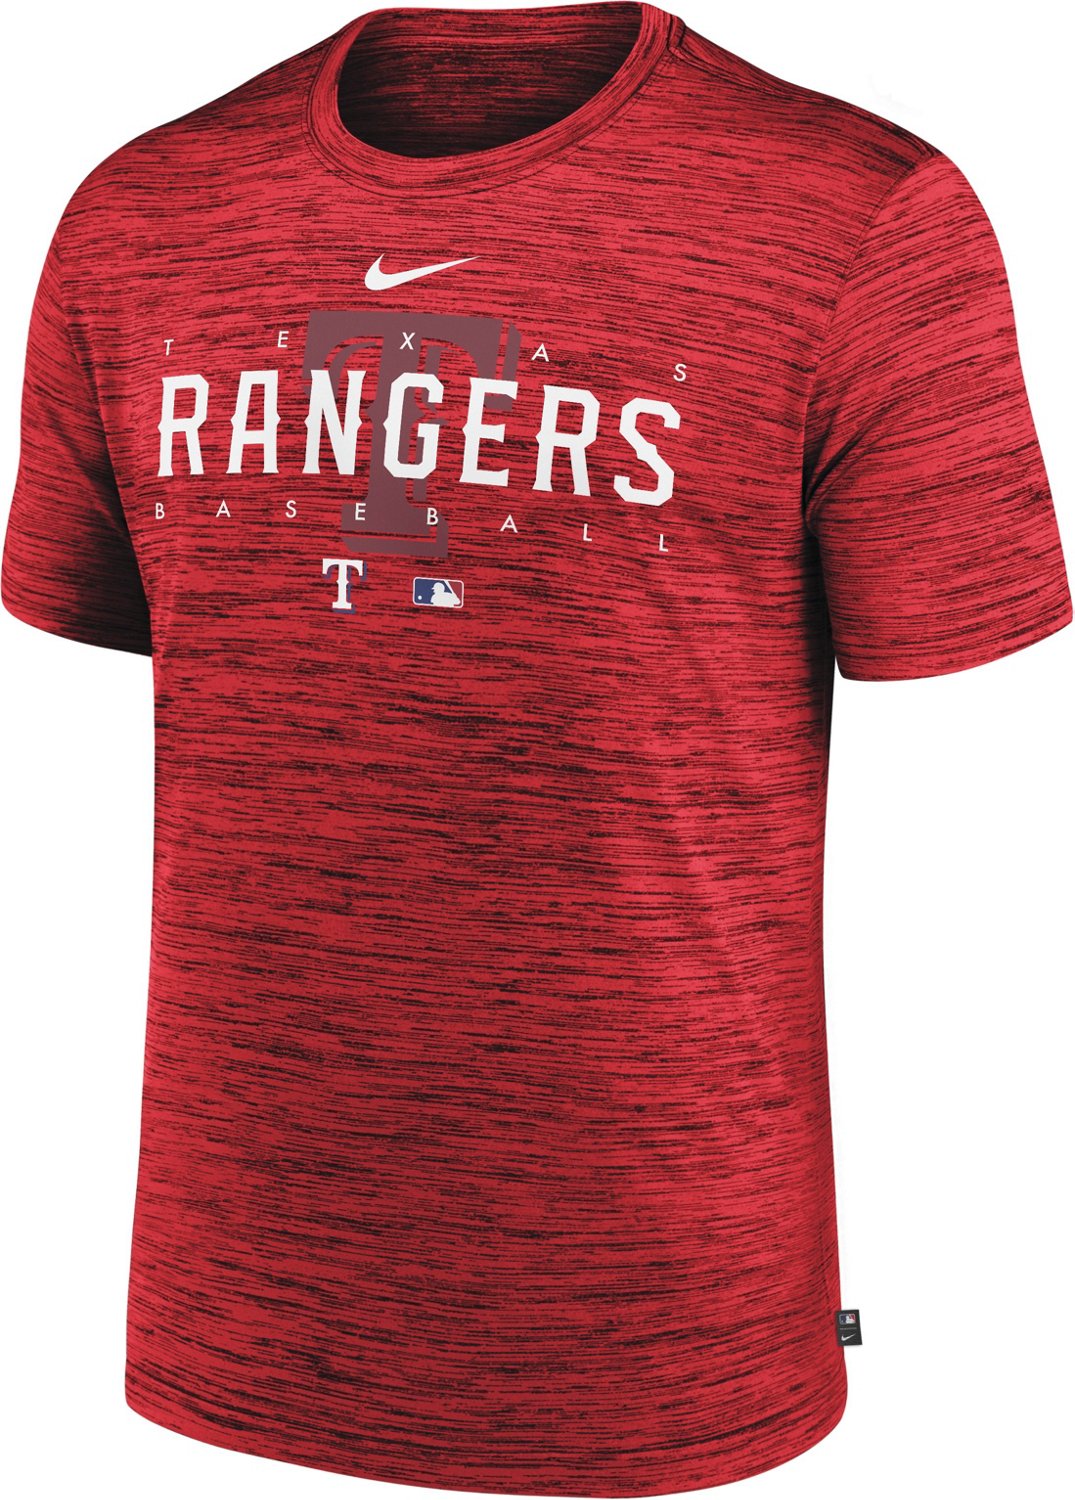 Nike Men's Texas Rangers Authentic Collection Dri-FIT Velocity